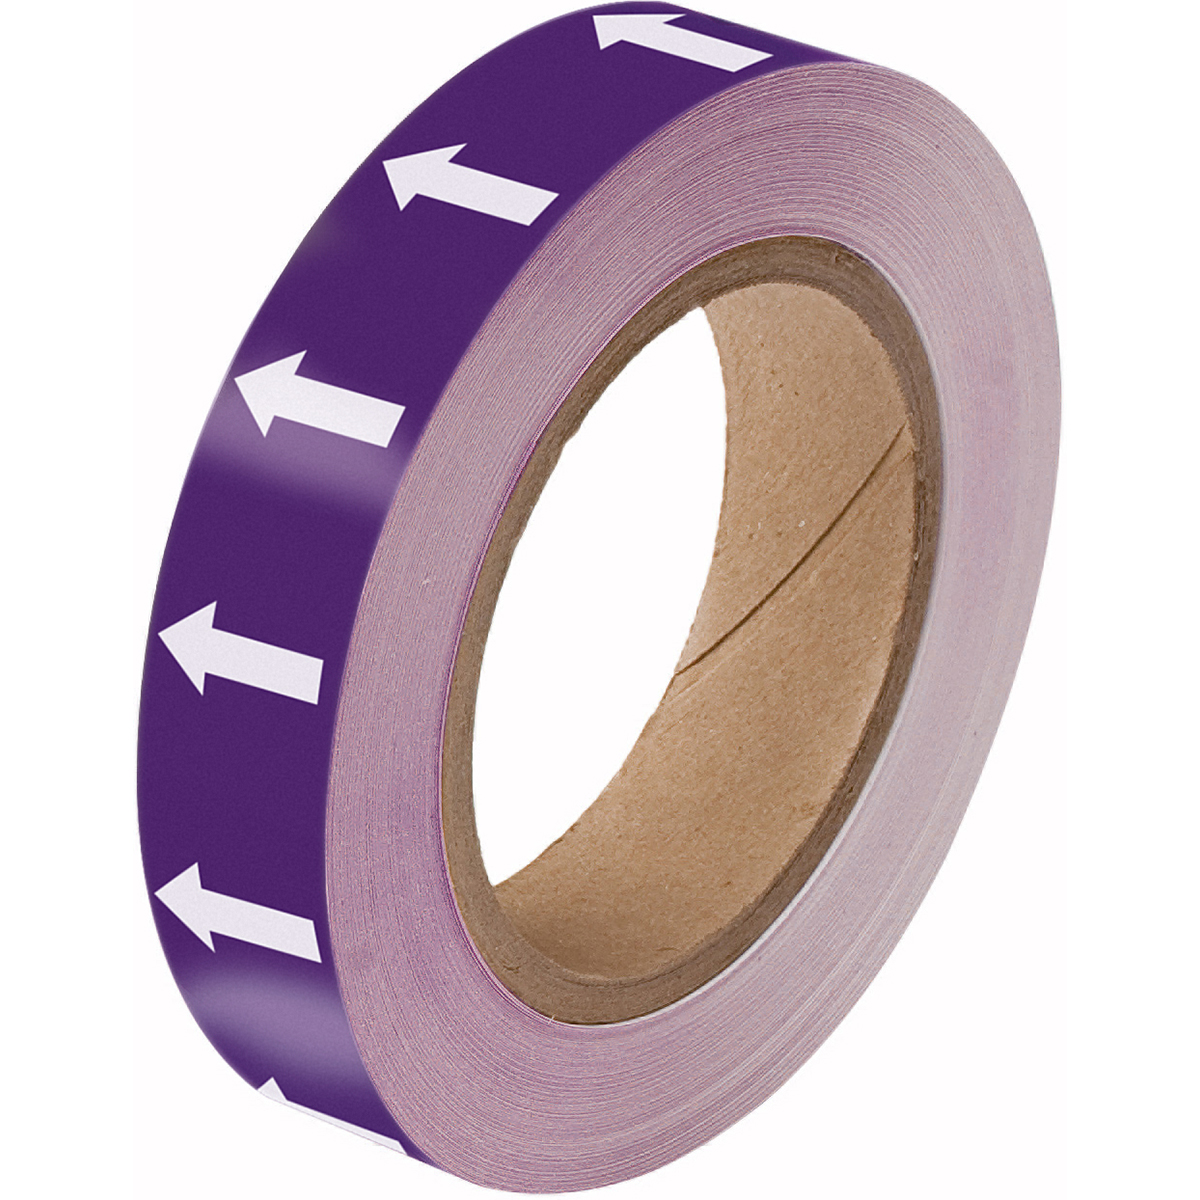 White on Purple Directional Flow Arrow Tape 